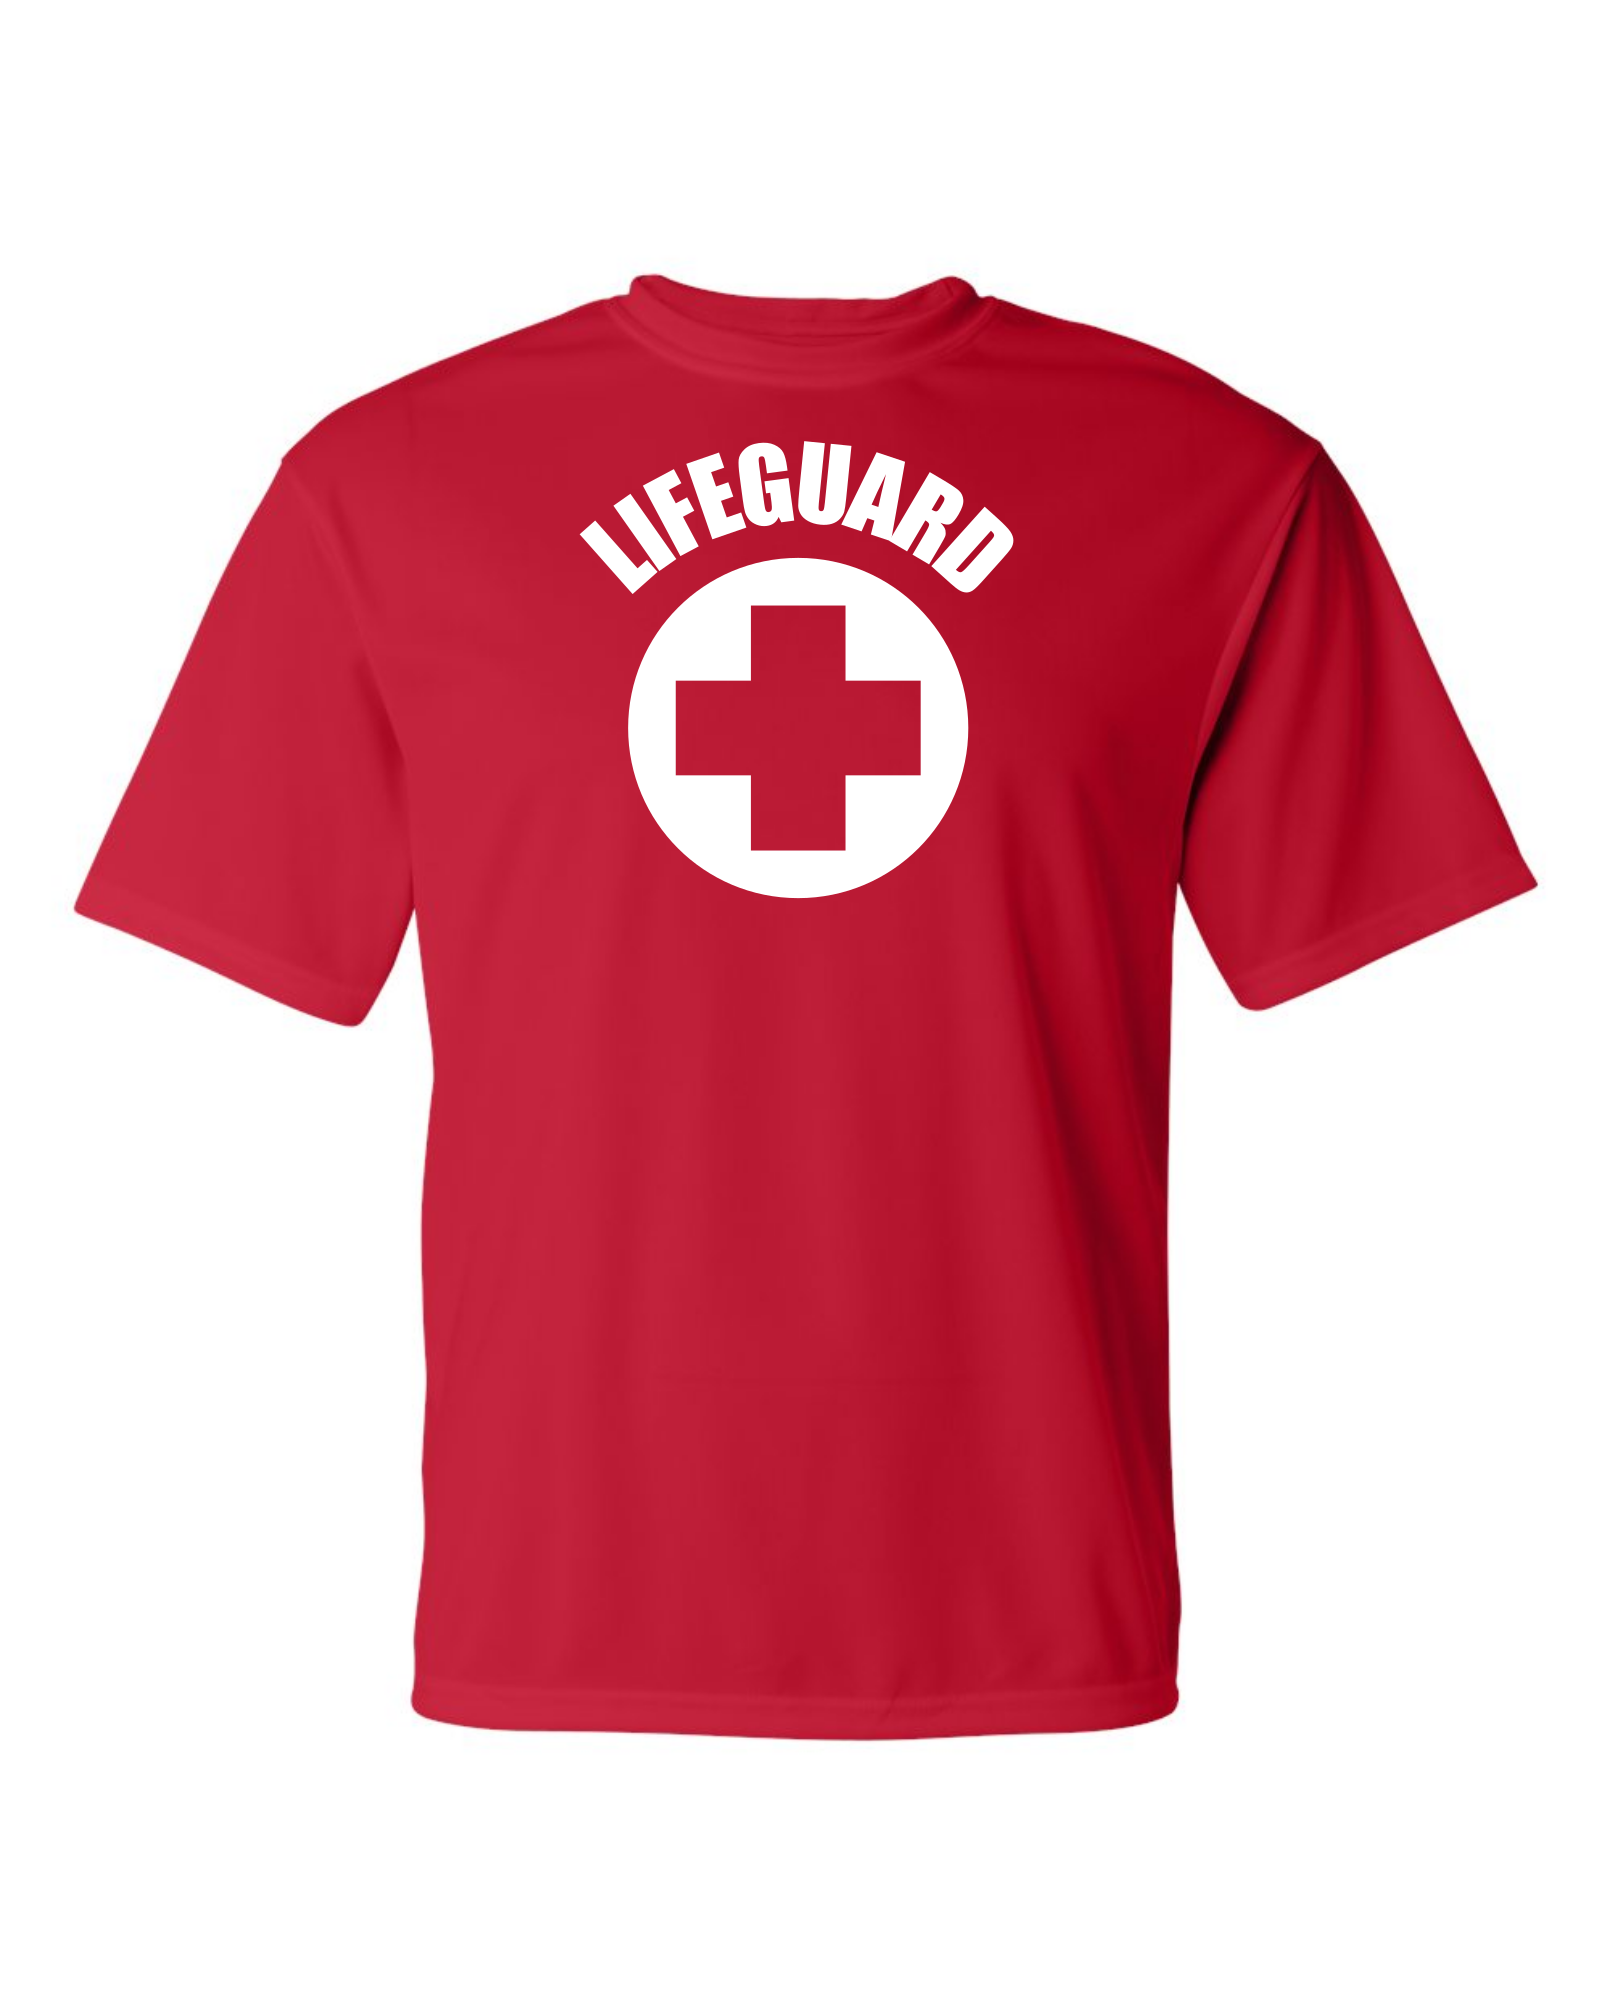 Lifeguard – T-Shirt (Round Logo) - Unique Country & More